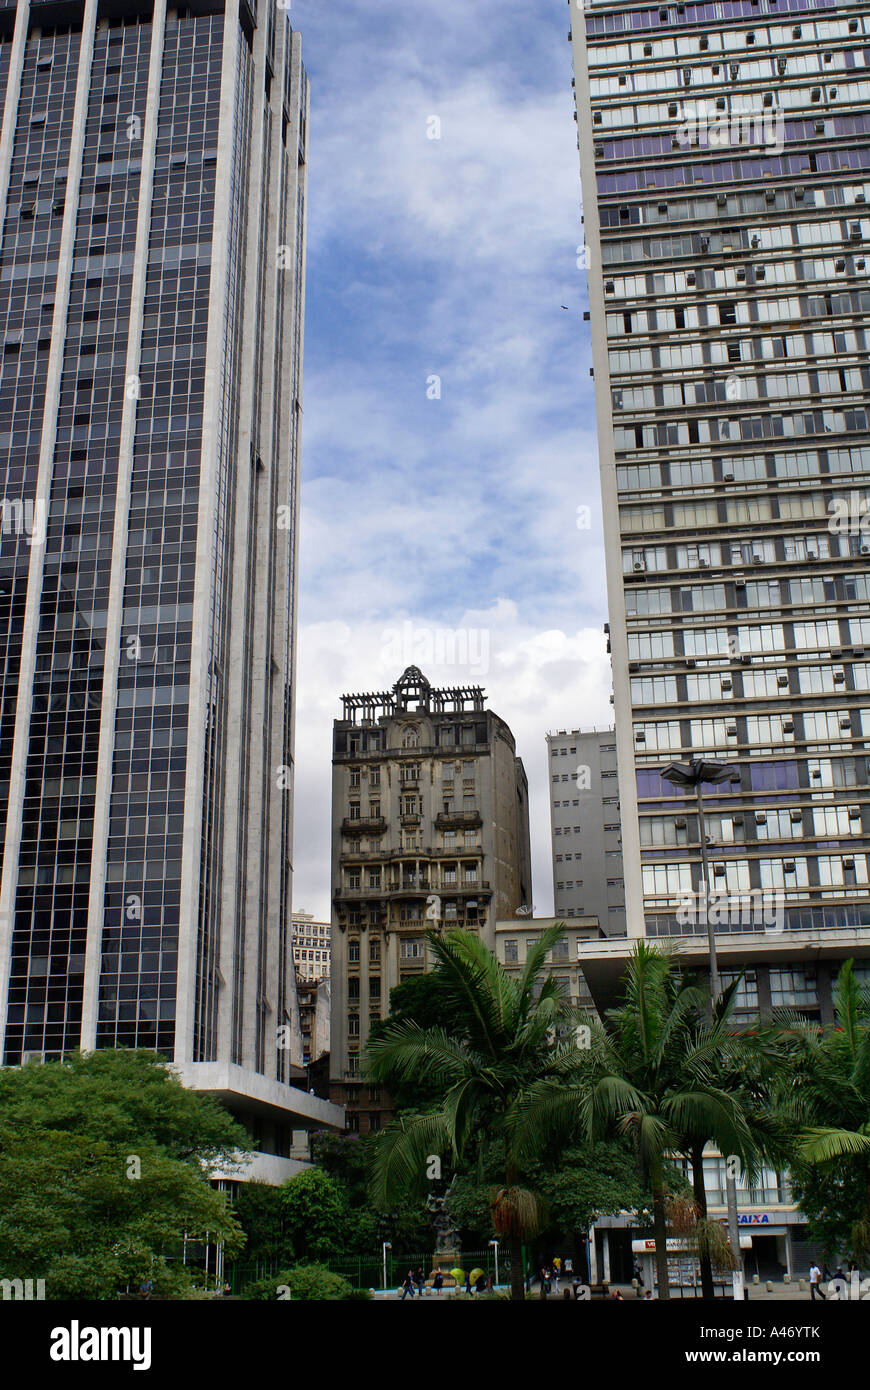 Grattacieli dal 1920 ies e degli anni ottanta ies, Sao Paulo, Brasile Foto Stock